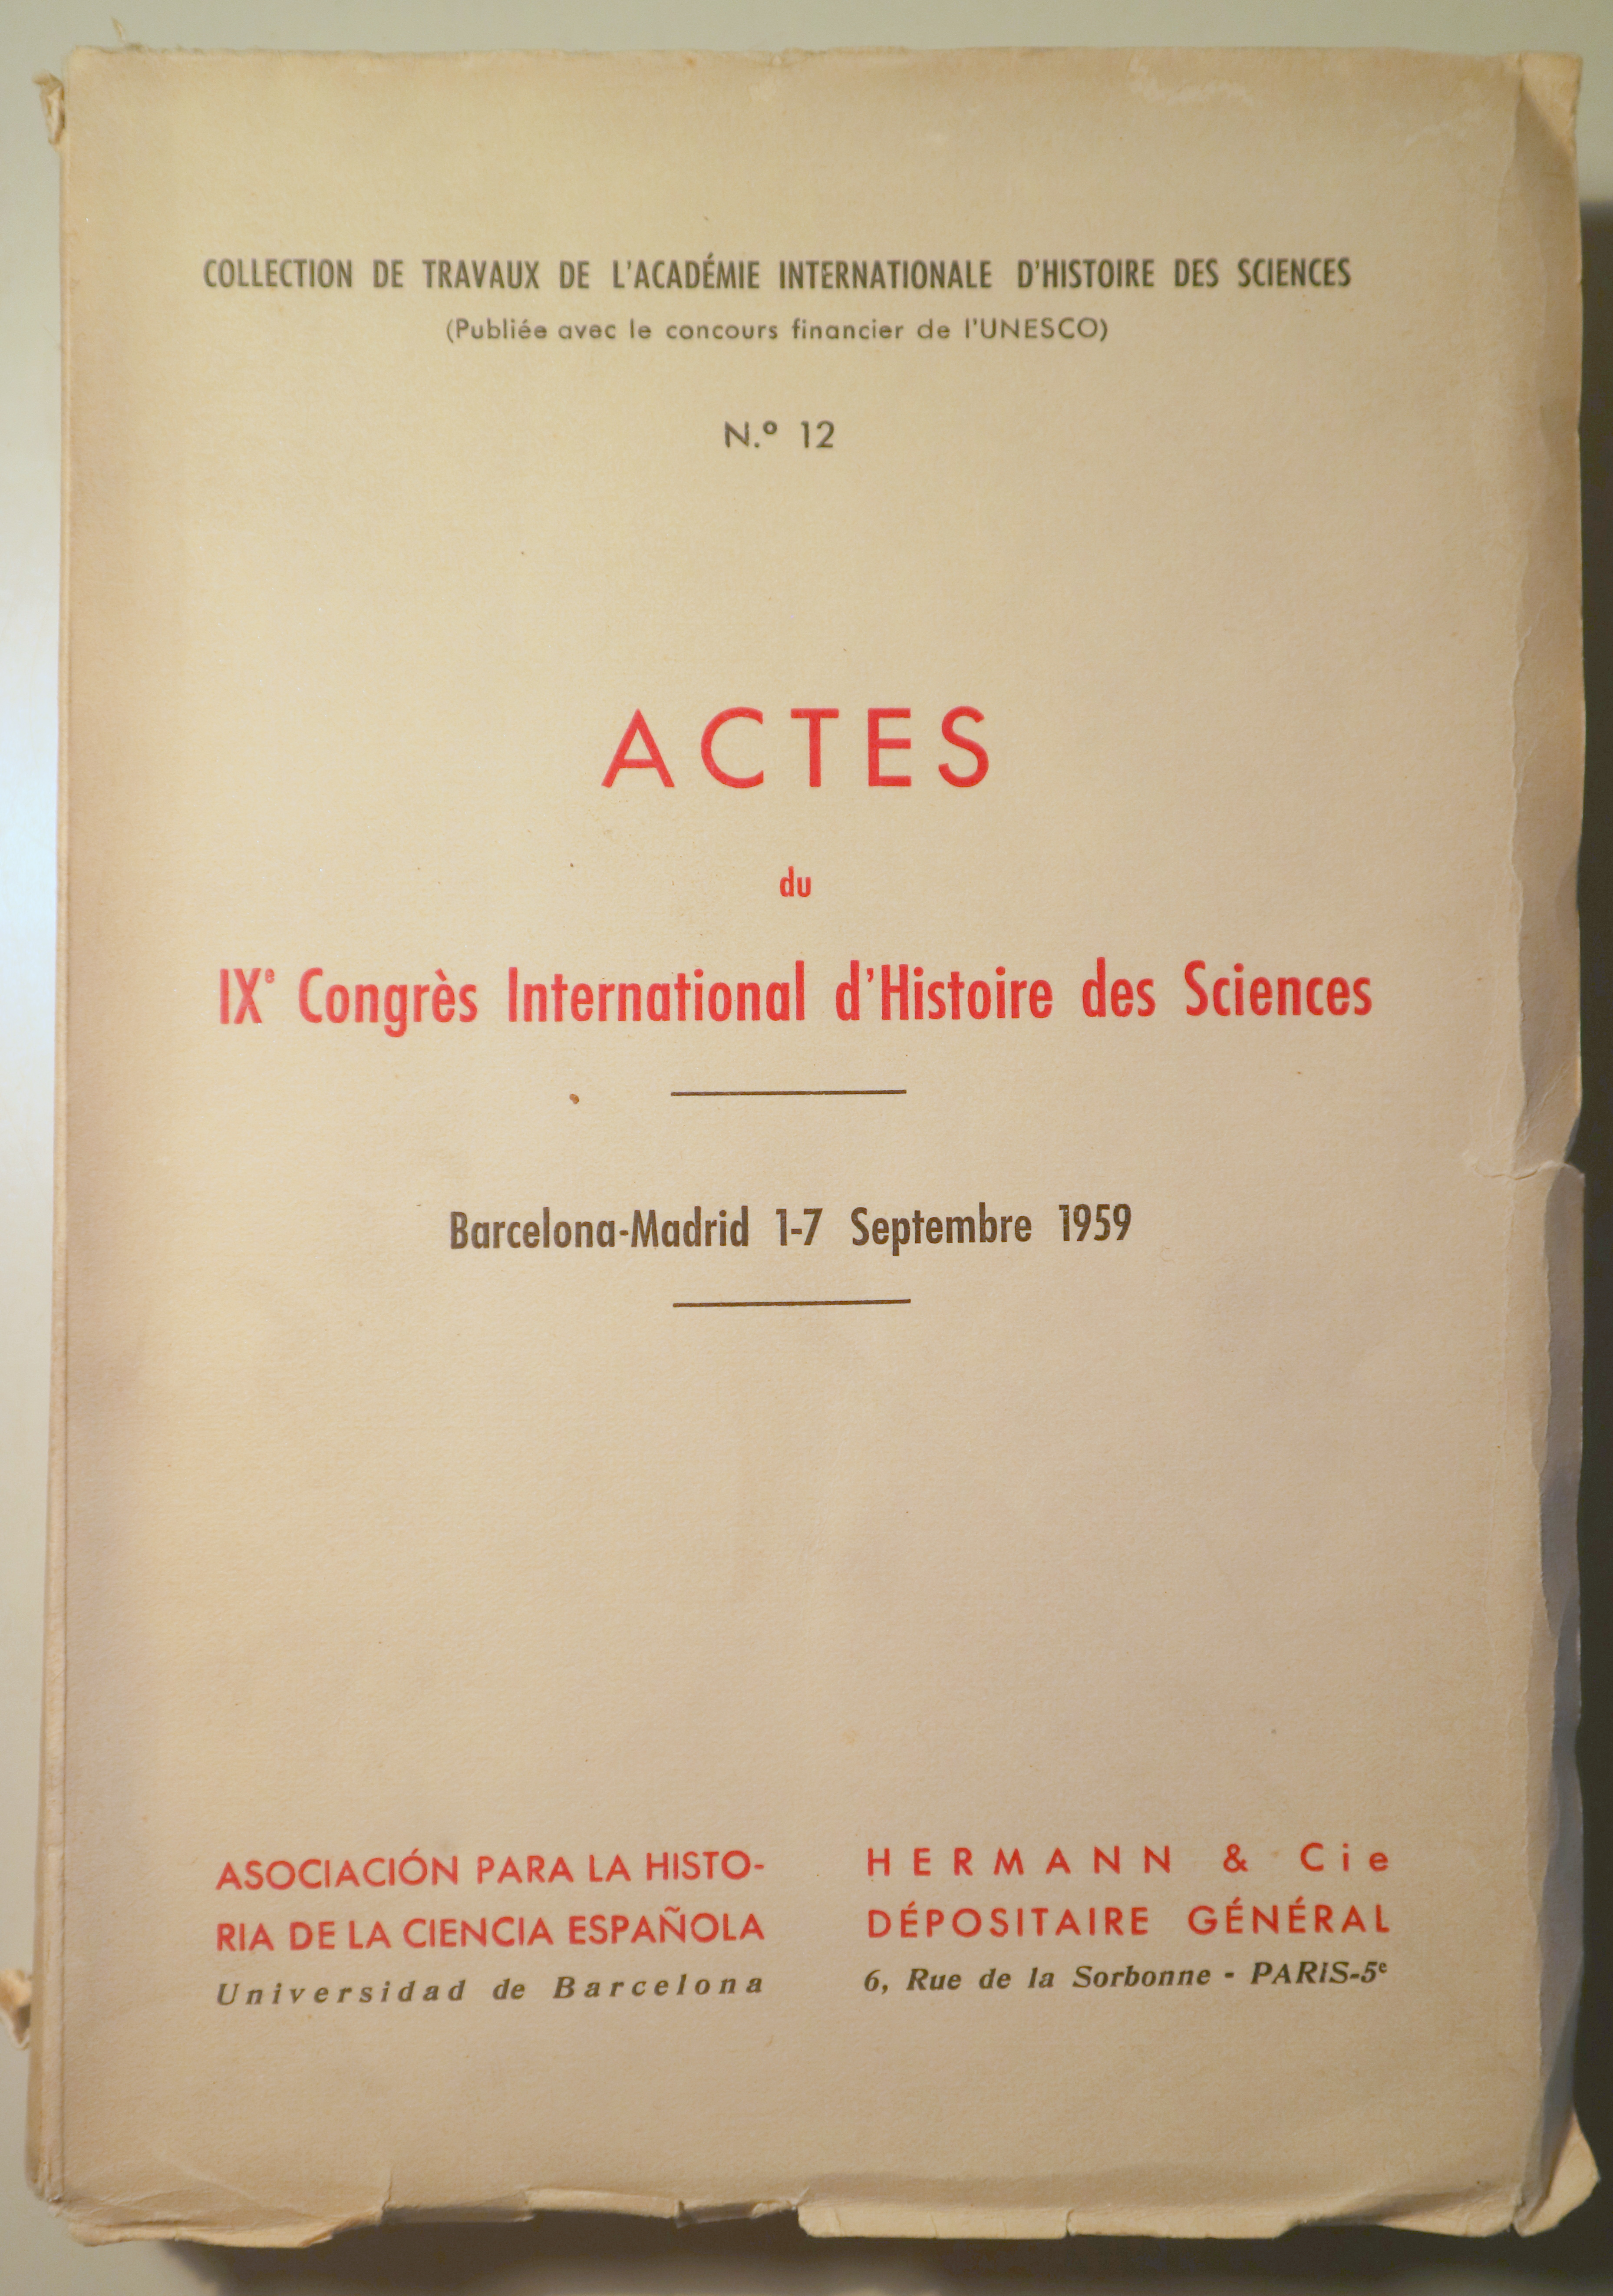 ACTES DU IXe CONGRÈS INTERNATIONAL D'HISTOIRE DES SCIENCES - Barcelona-Madrid 1959 - Ilustrado